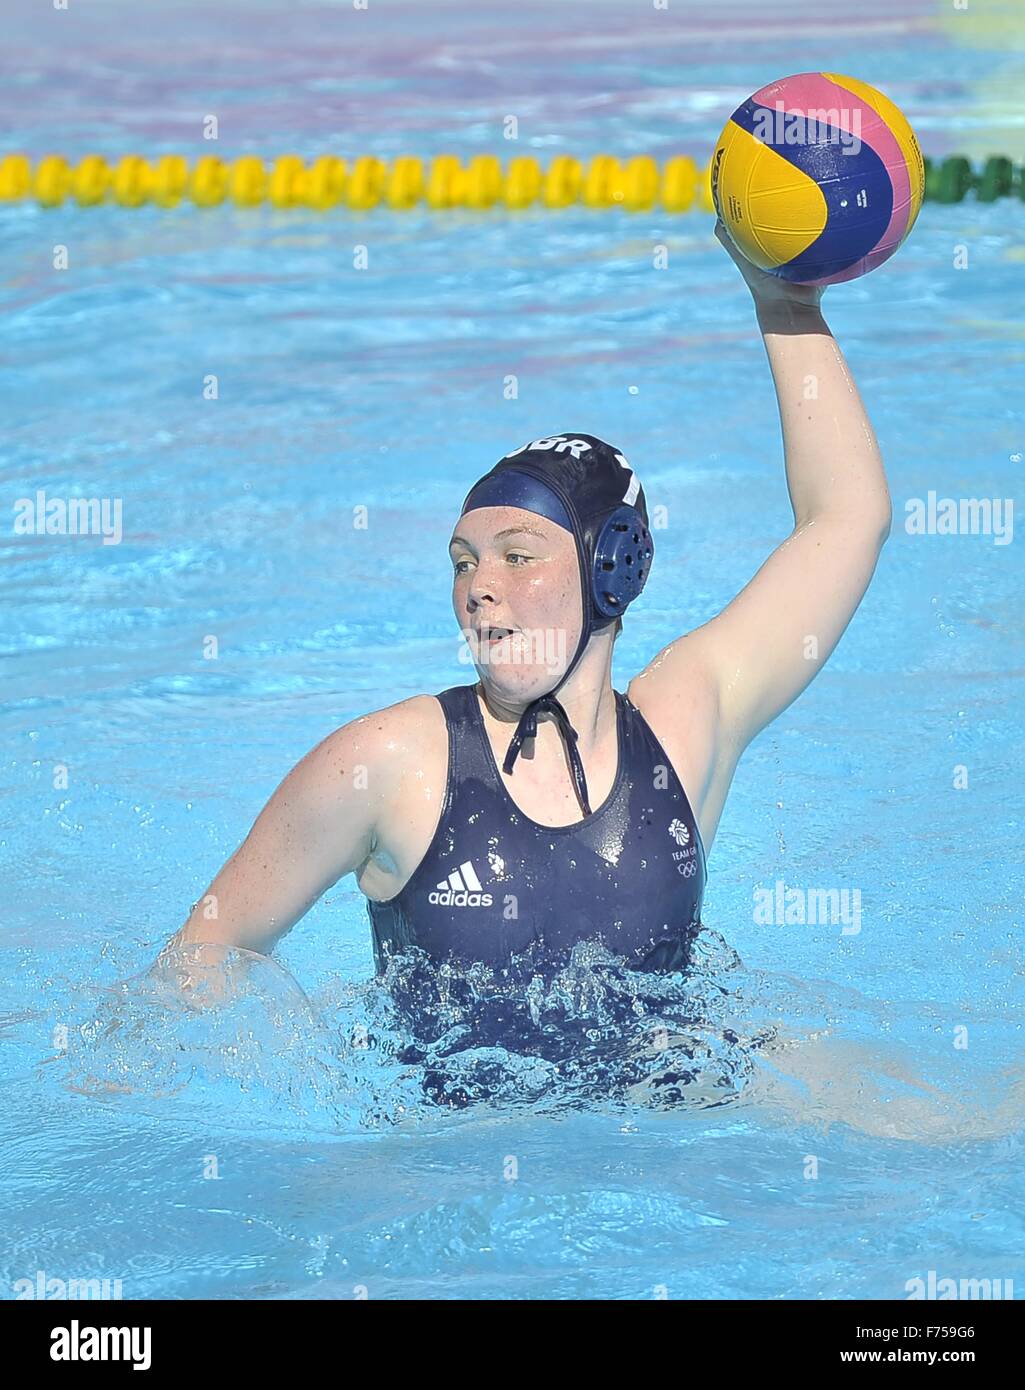 Hannah Edwards (GBR). Holland (NED) V Großbritannien (GBR). Womens Wasserball. Wasserball-Bereich. Baku. Aserbaidschan. Baku2015. 1. Europäische Spiele. 14.06.2015. Stockfoto